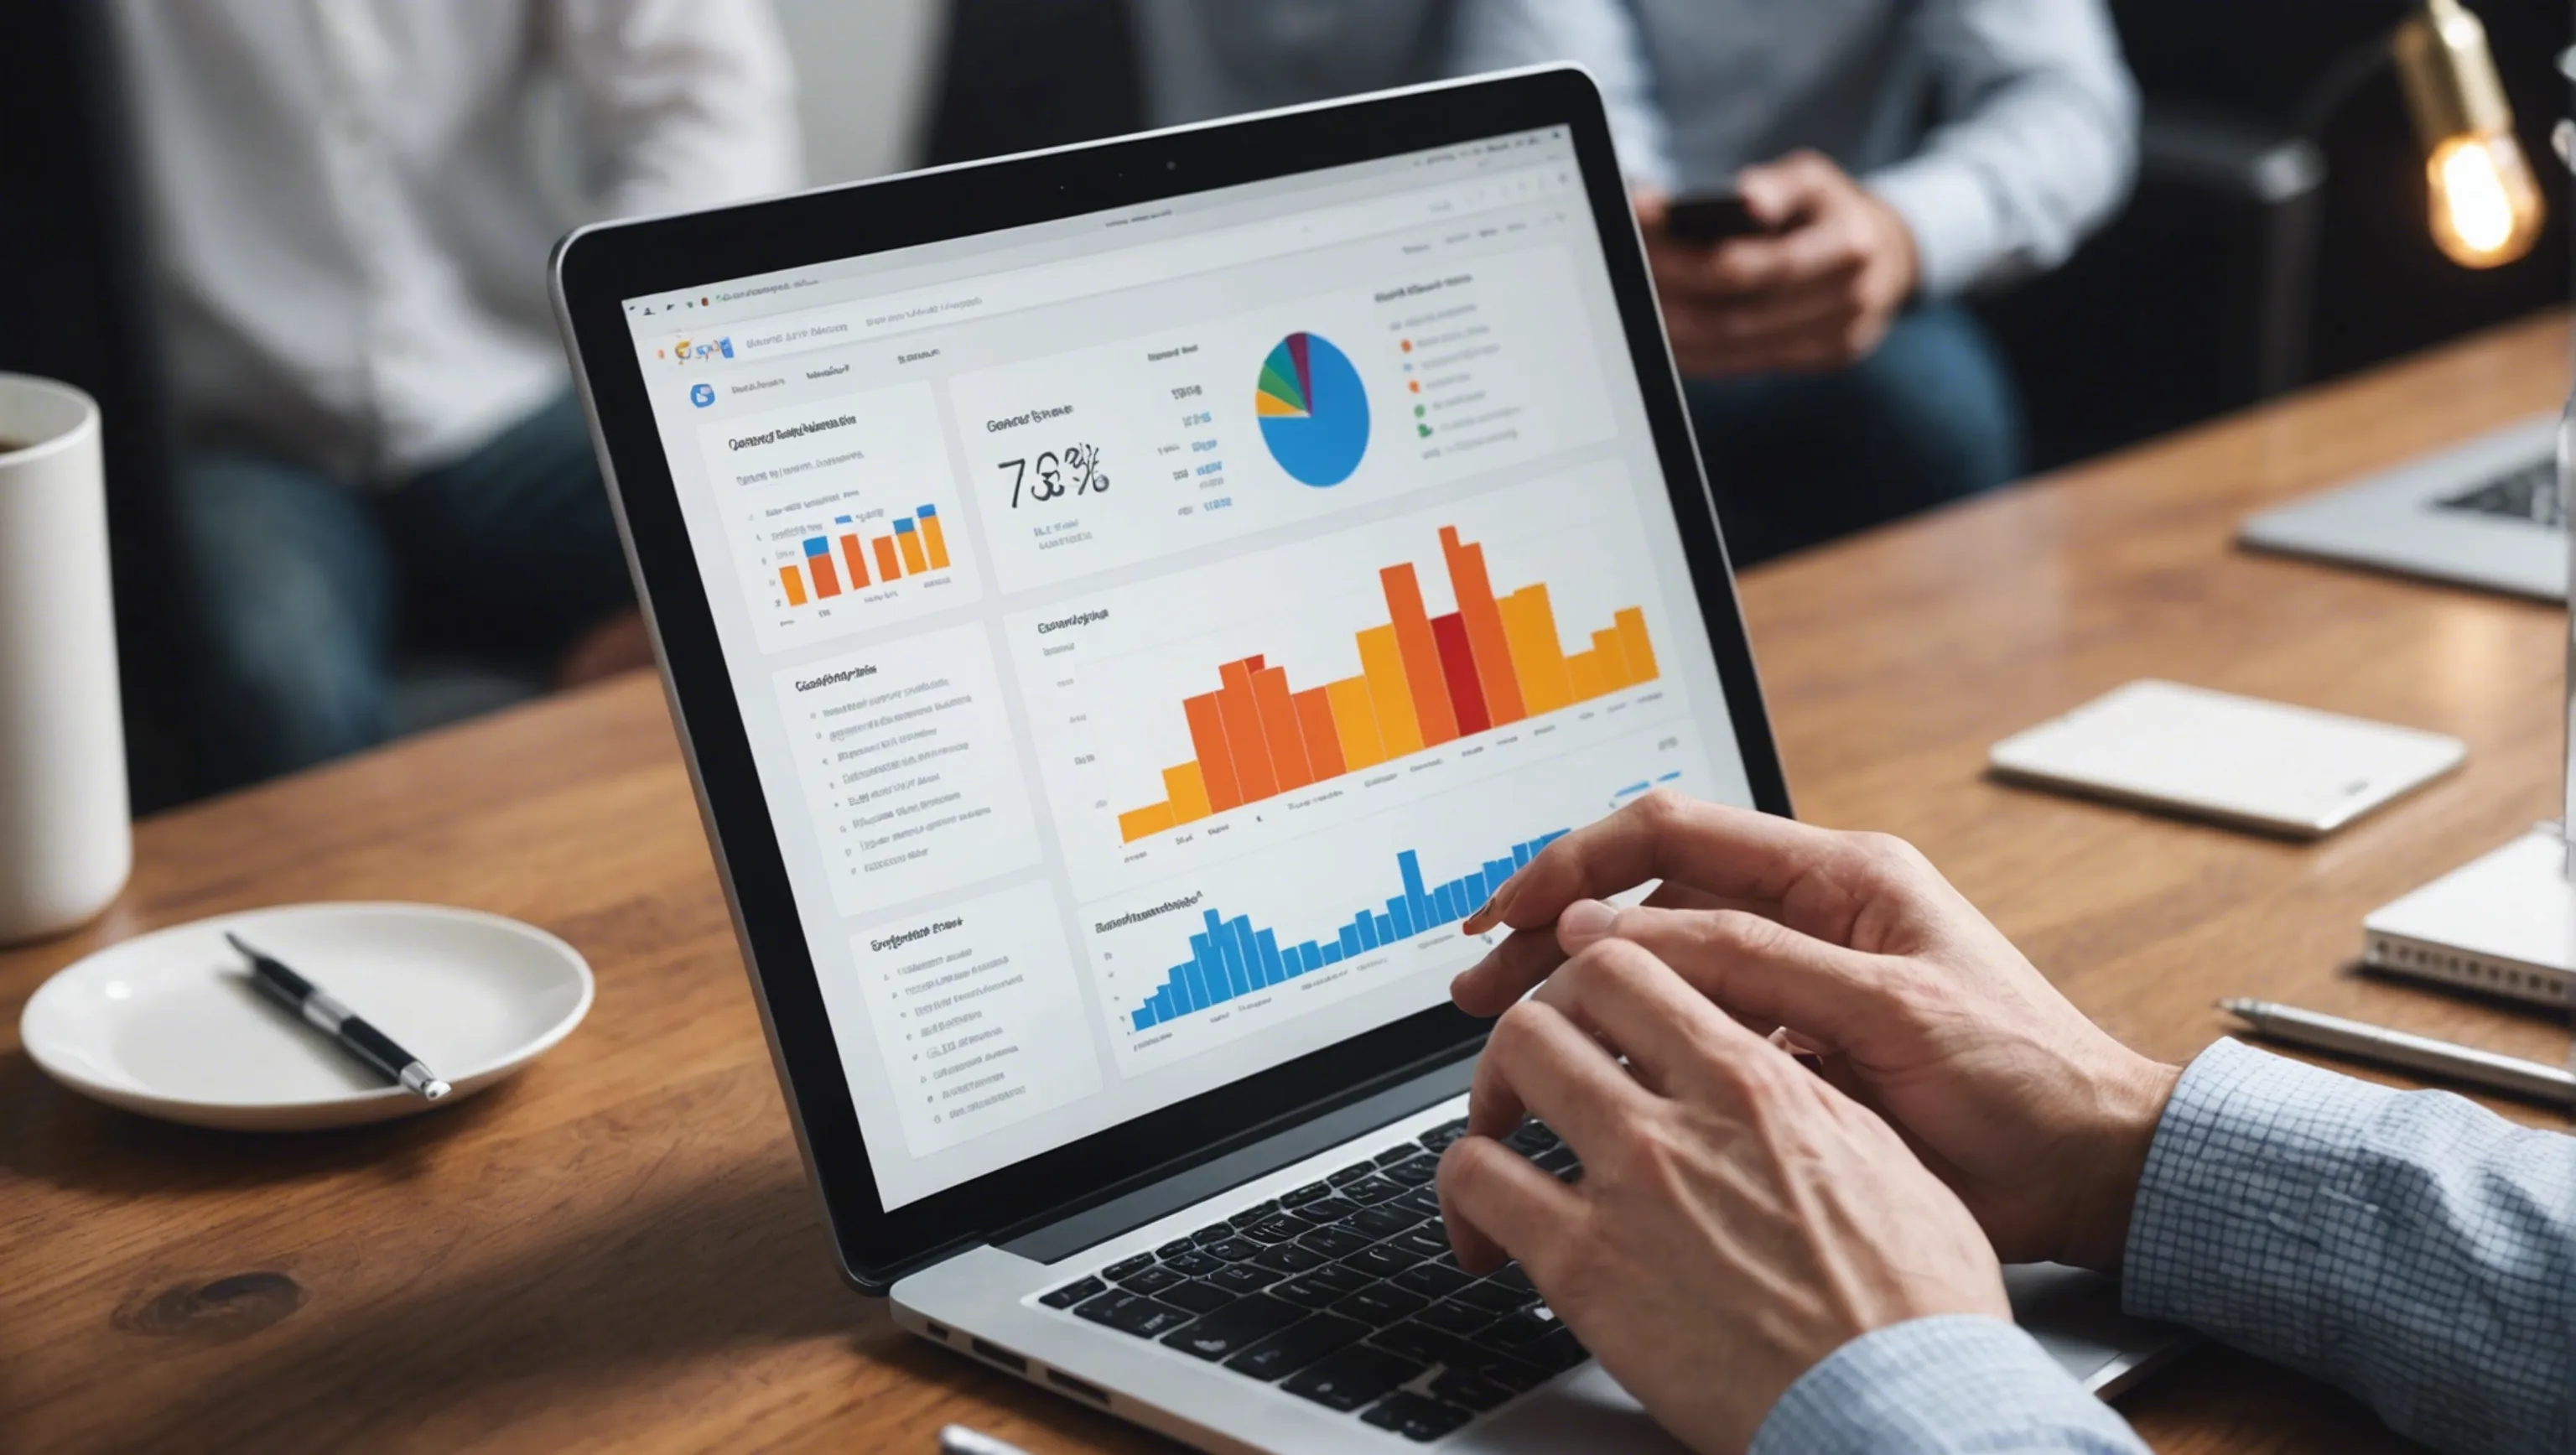 Google Analytics for content performance analysis